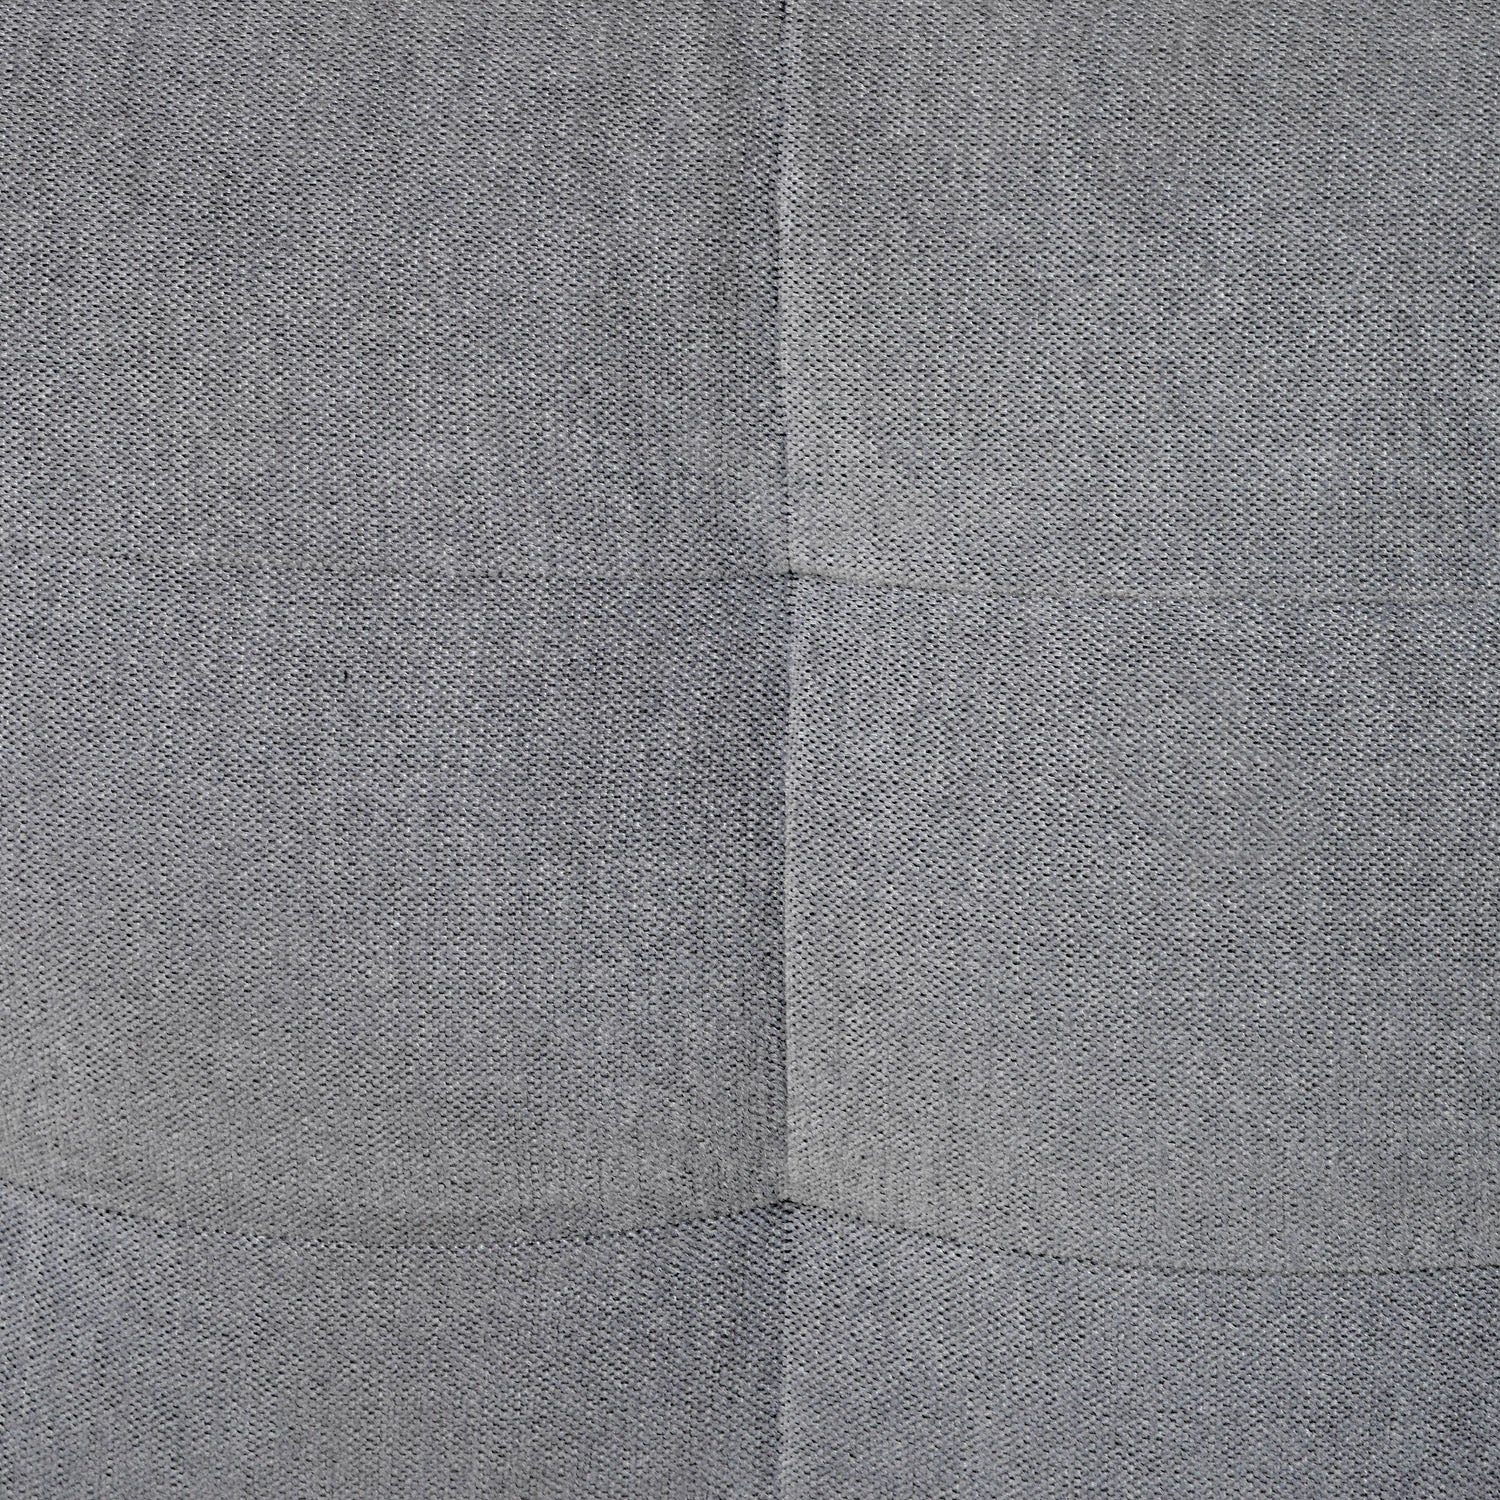 Jerry 3 Seater Sofa (Grey)